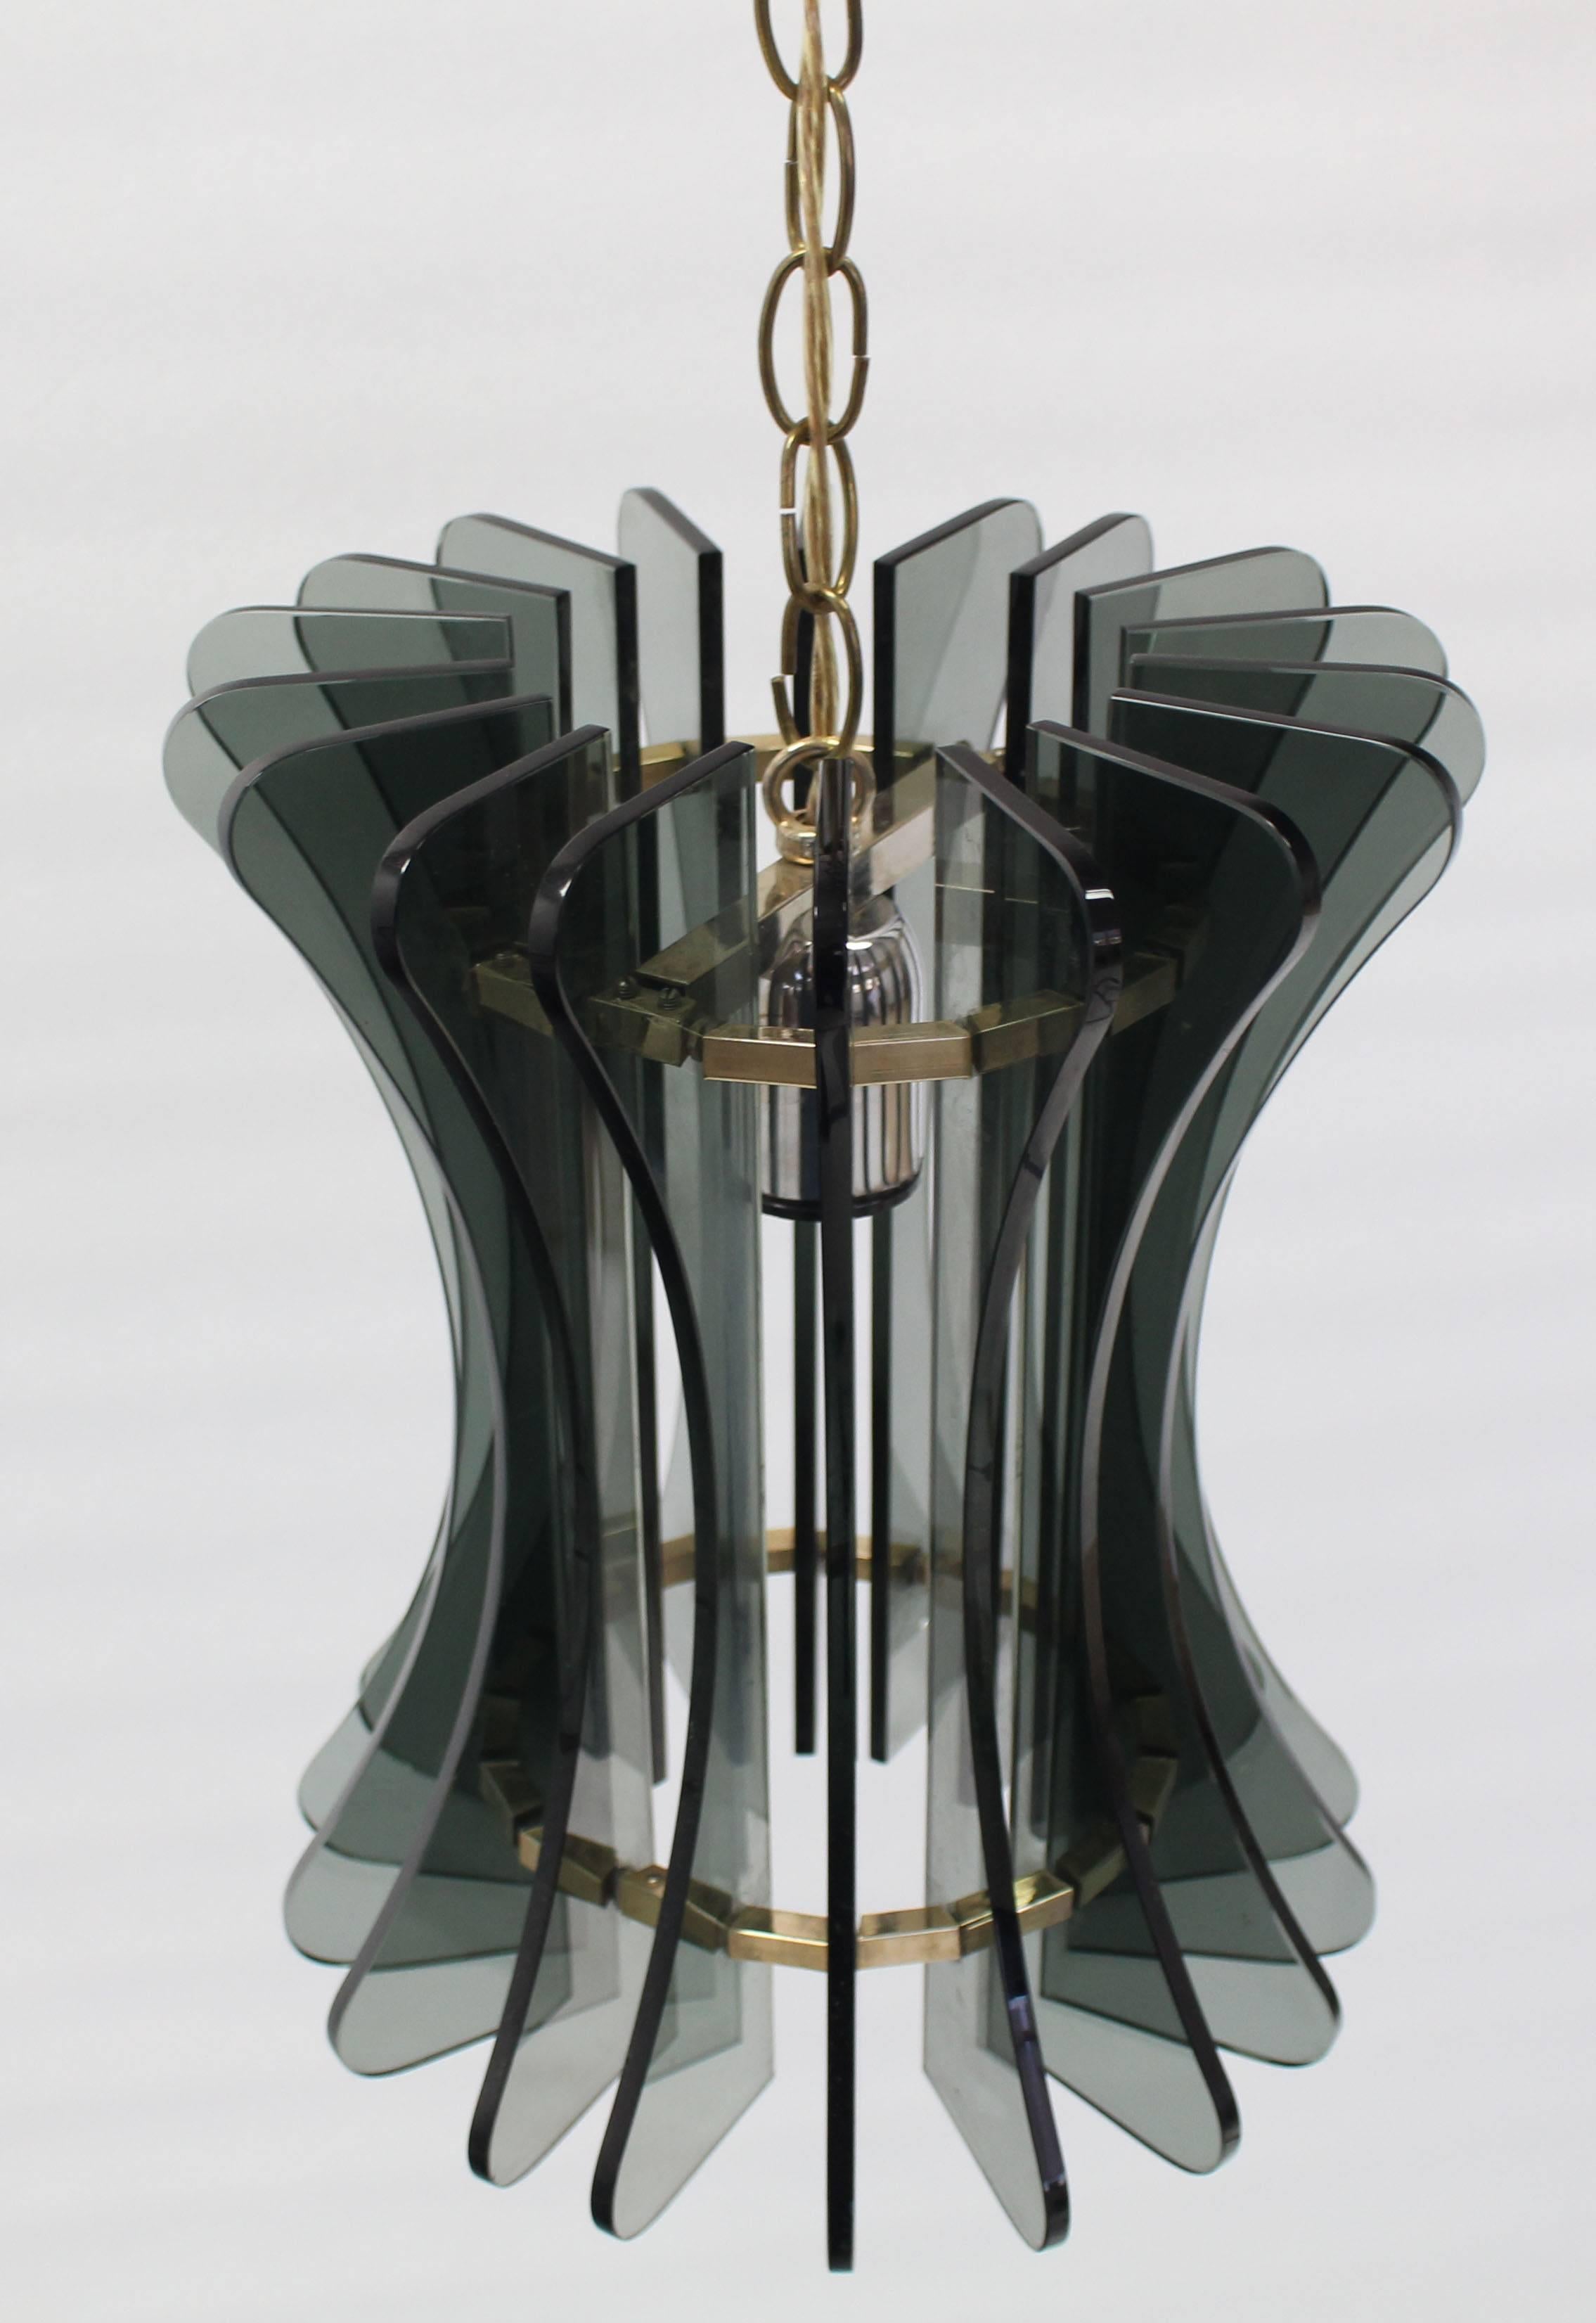 Veca Italian Mid-Century Modern Pendant Light Fixture Chandelier For Sale 1